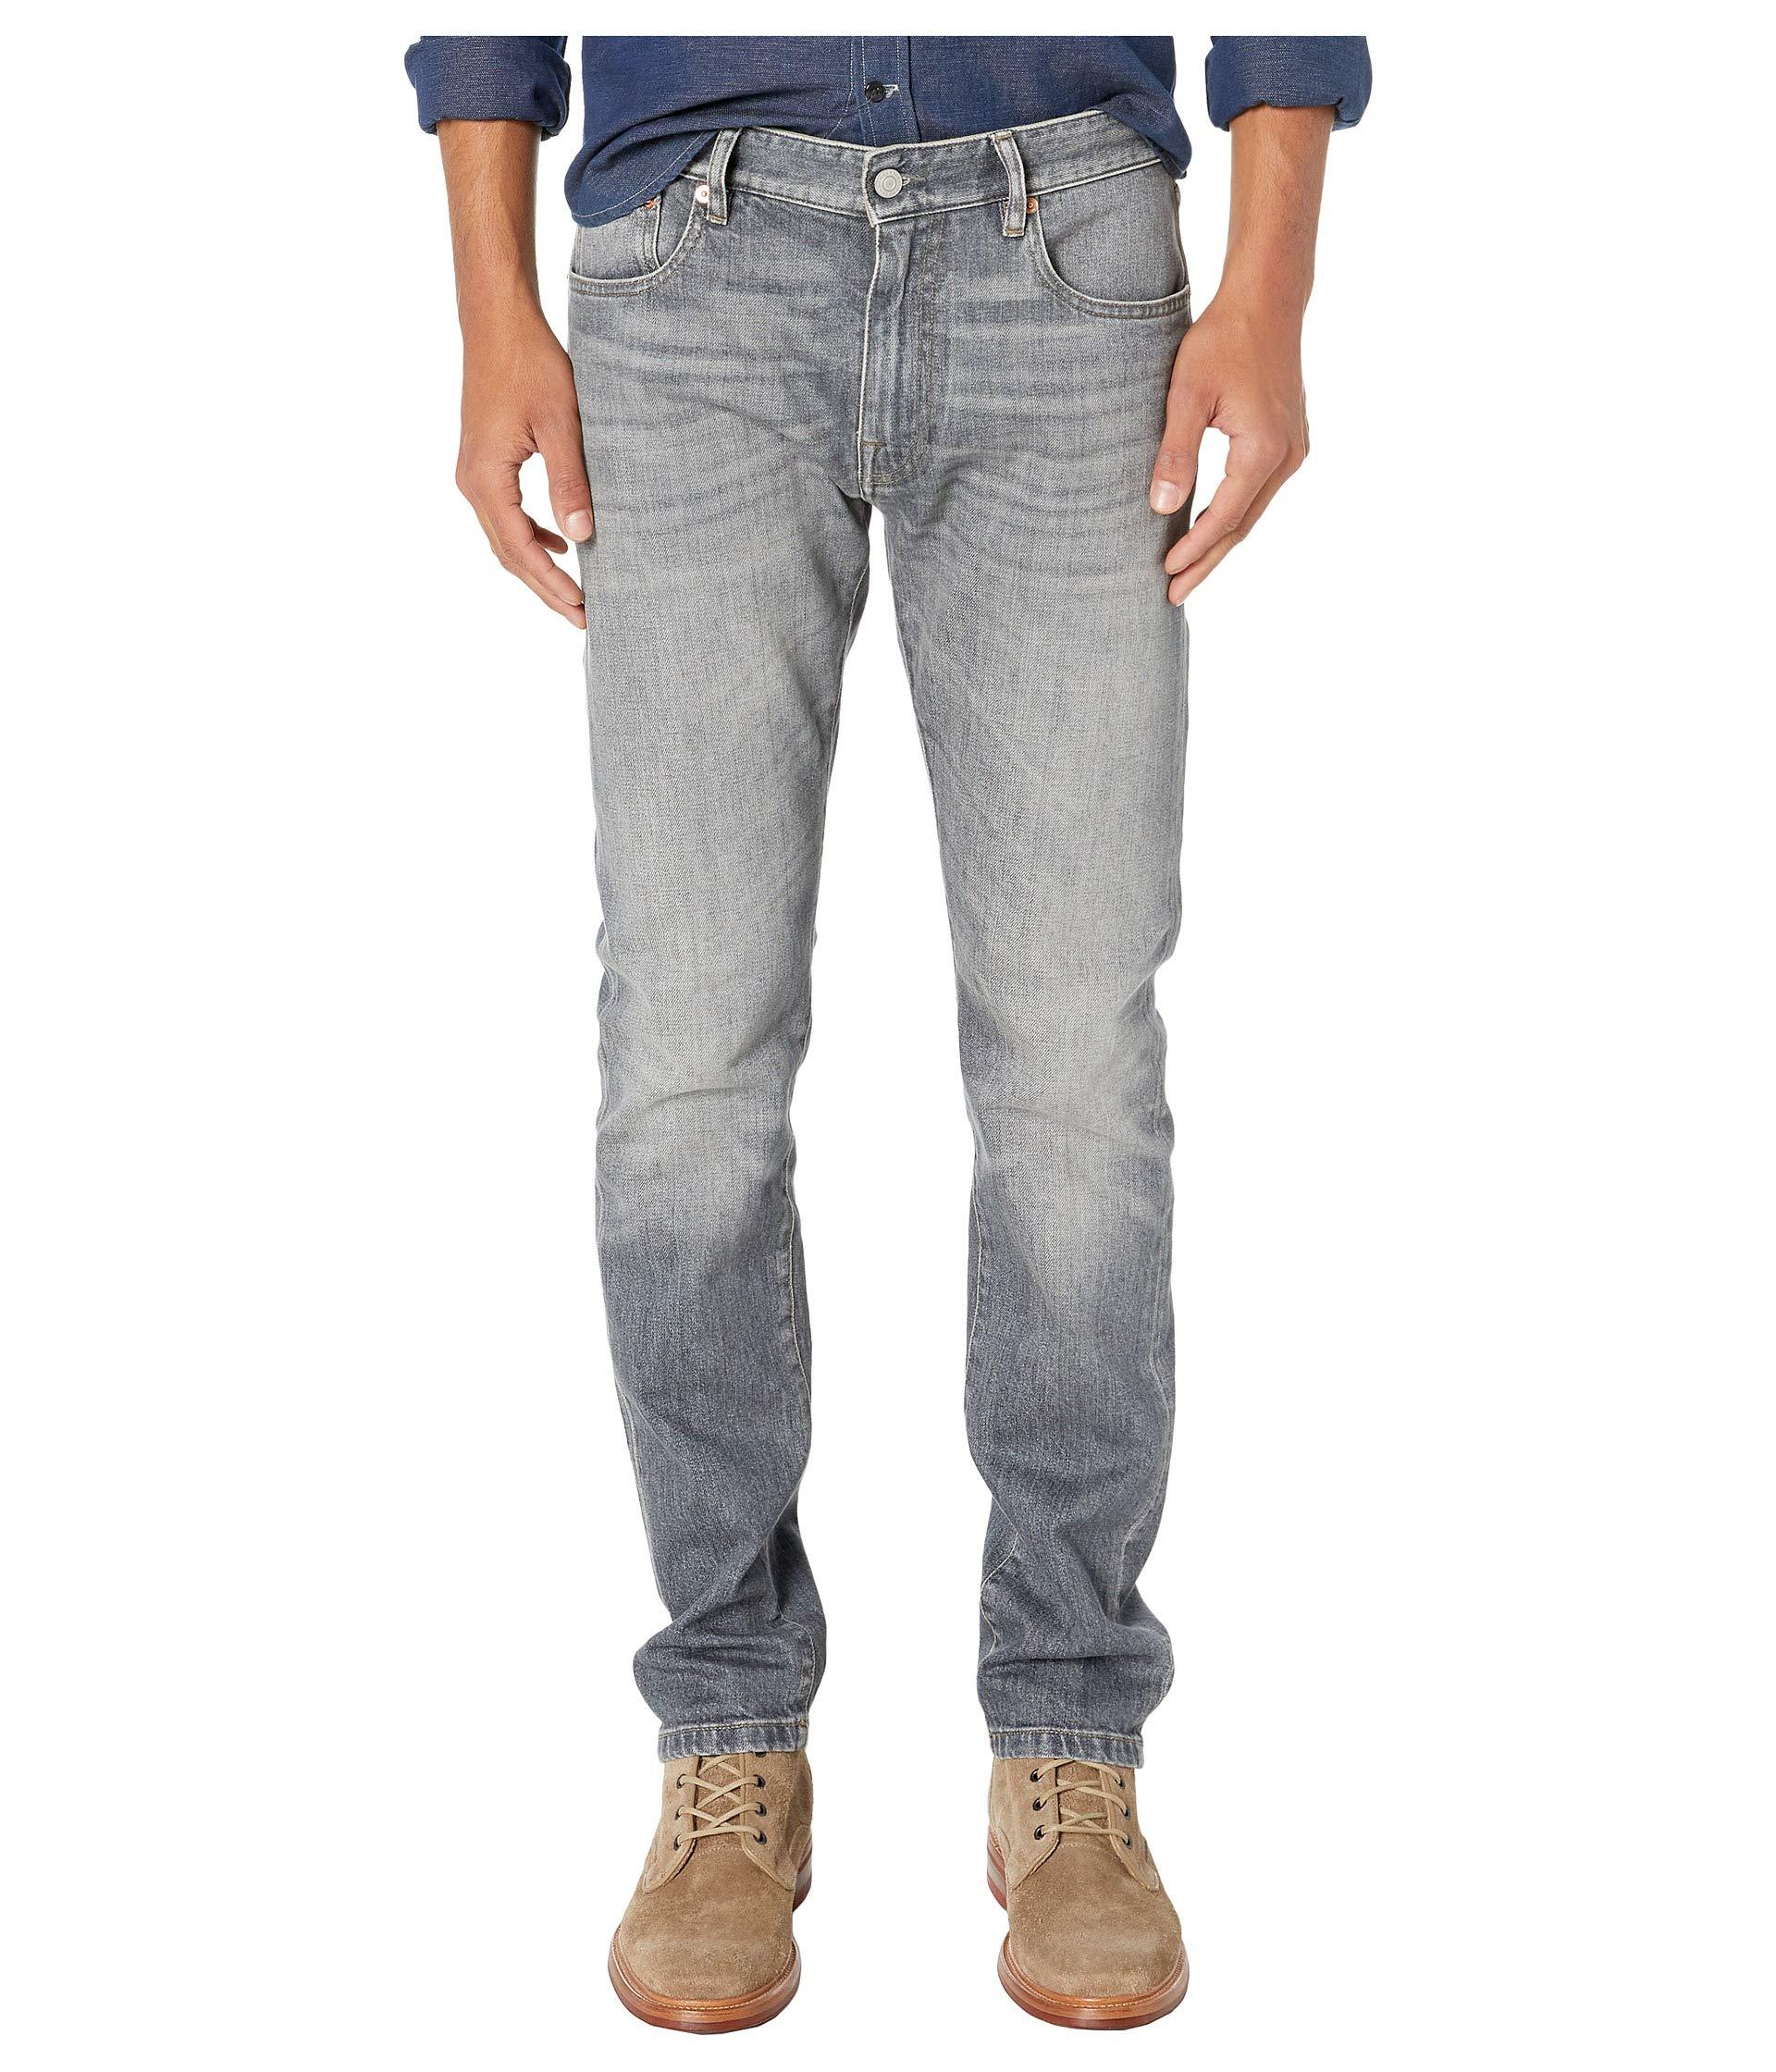 Belstaff Denim Light Wash Longton Slim Jeans In Shale for Men - Lyst